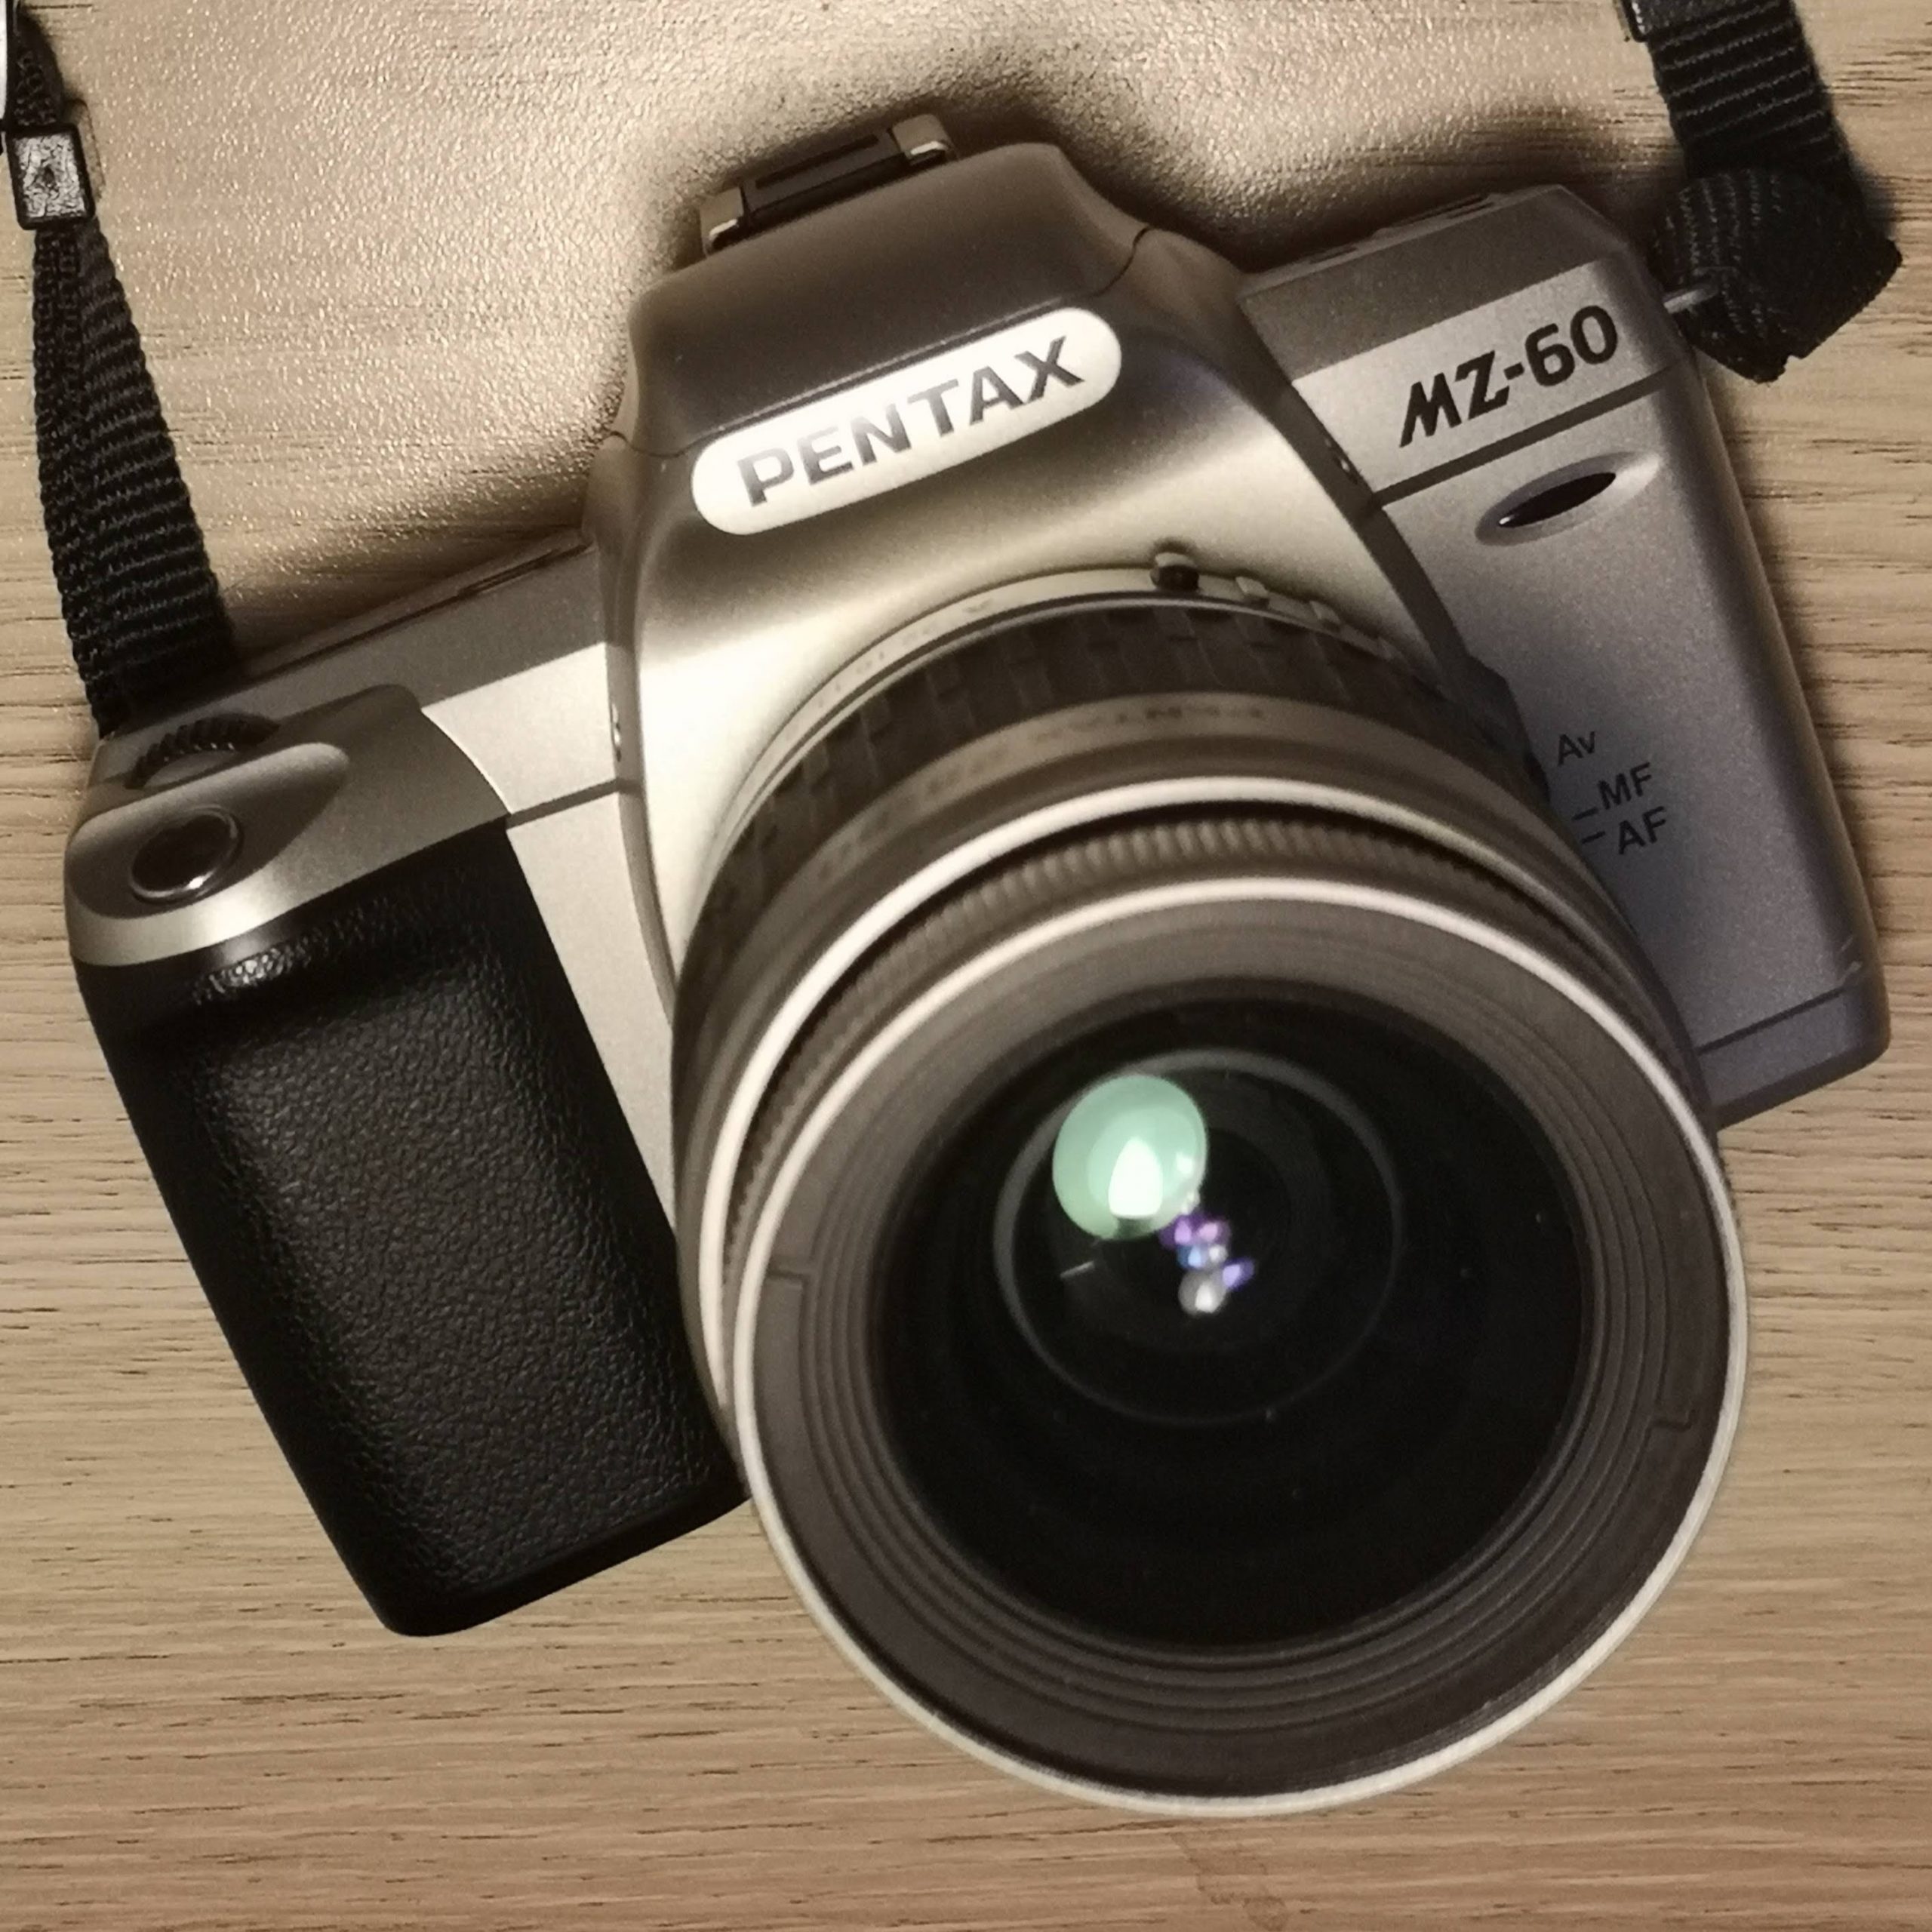 Pentax MZ-60 with Pentax SMC FA 28-90mm kit lens